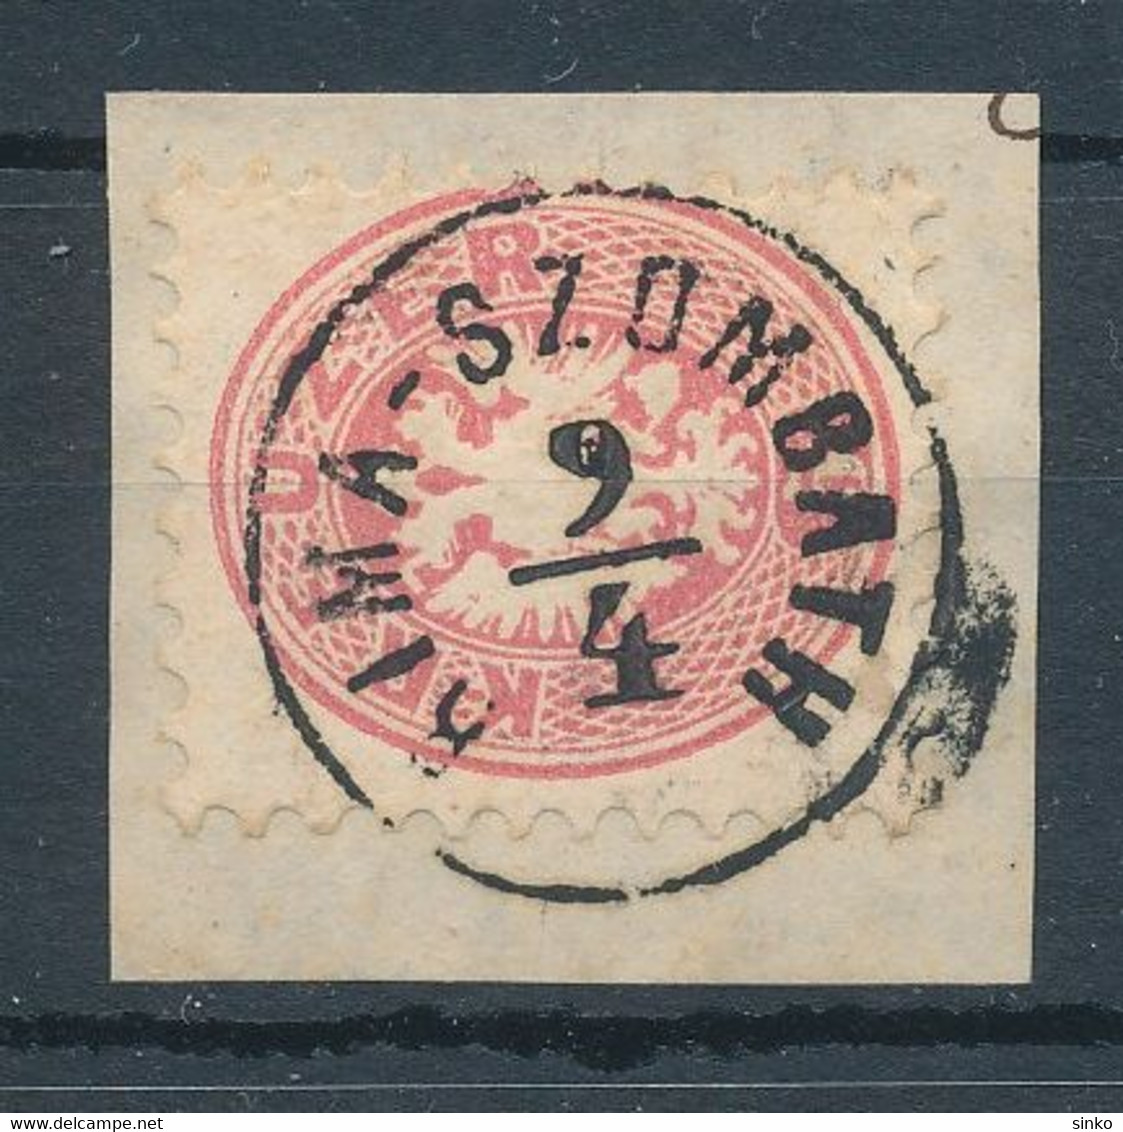 1864. Typography With Embossed Printing, 5kr Stamp RIMA-SZOMBATH - ...-1867 Prephilately